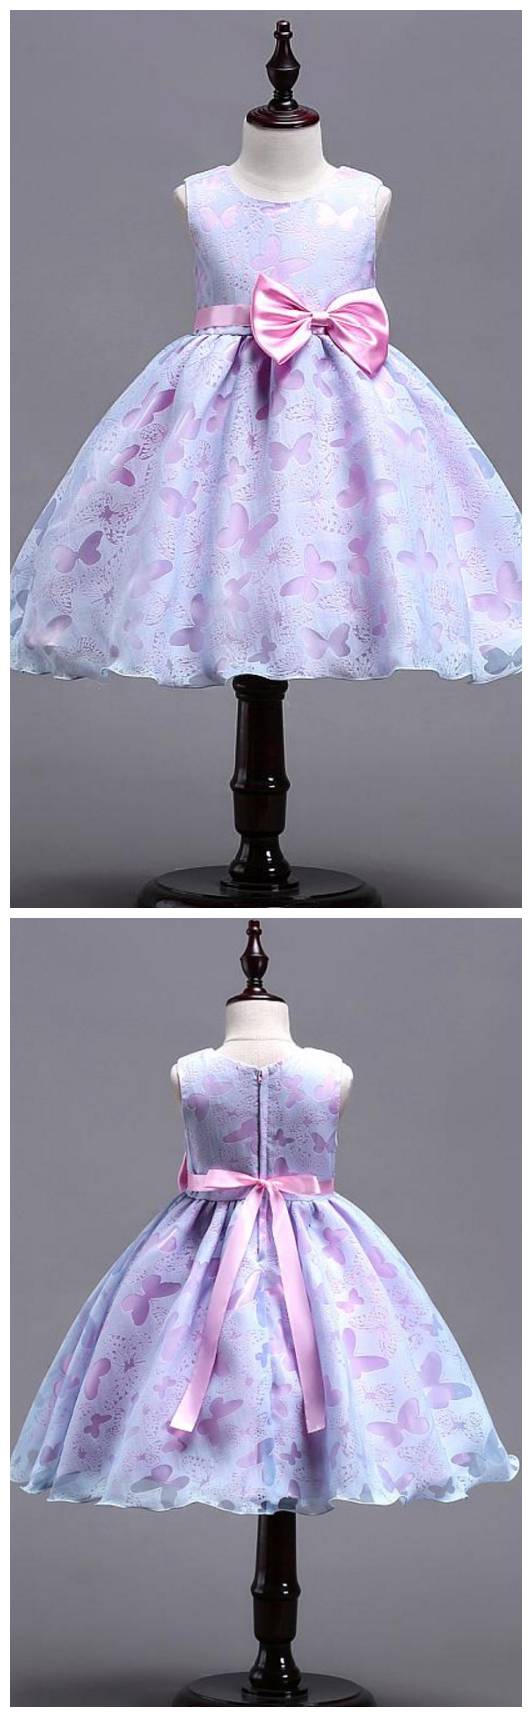 Printed Cloth Jewel Neckline Ball Gown Flower Girl Dress